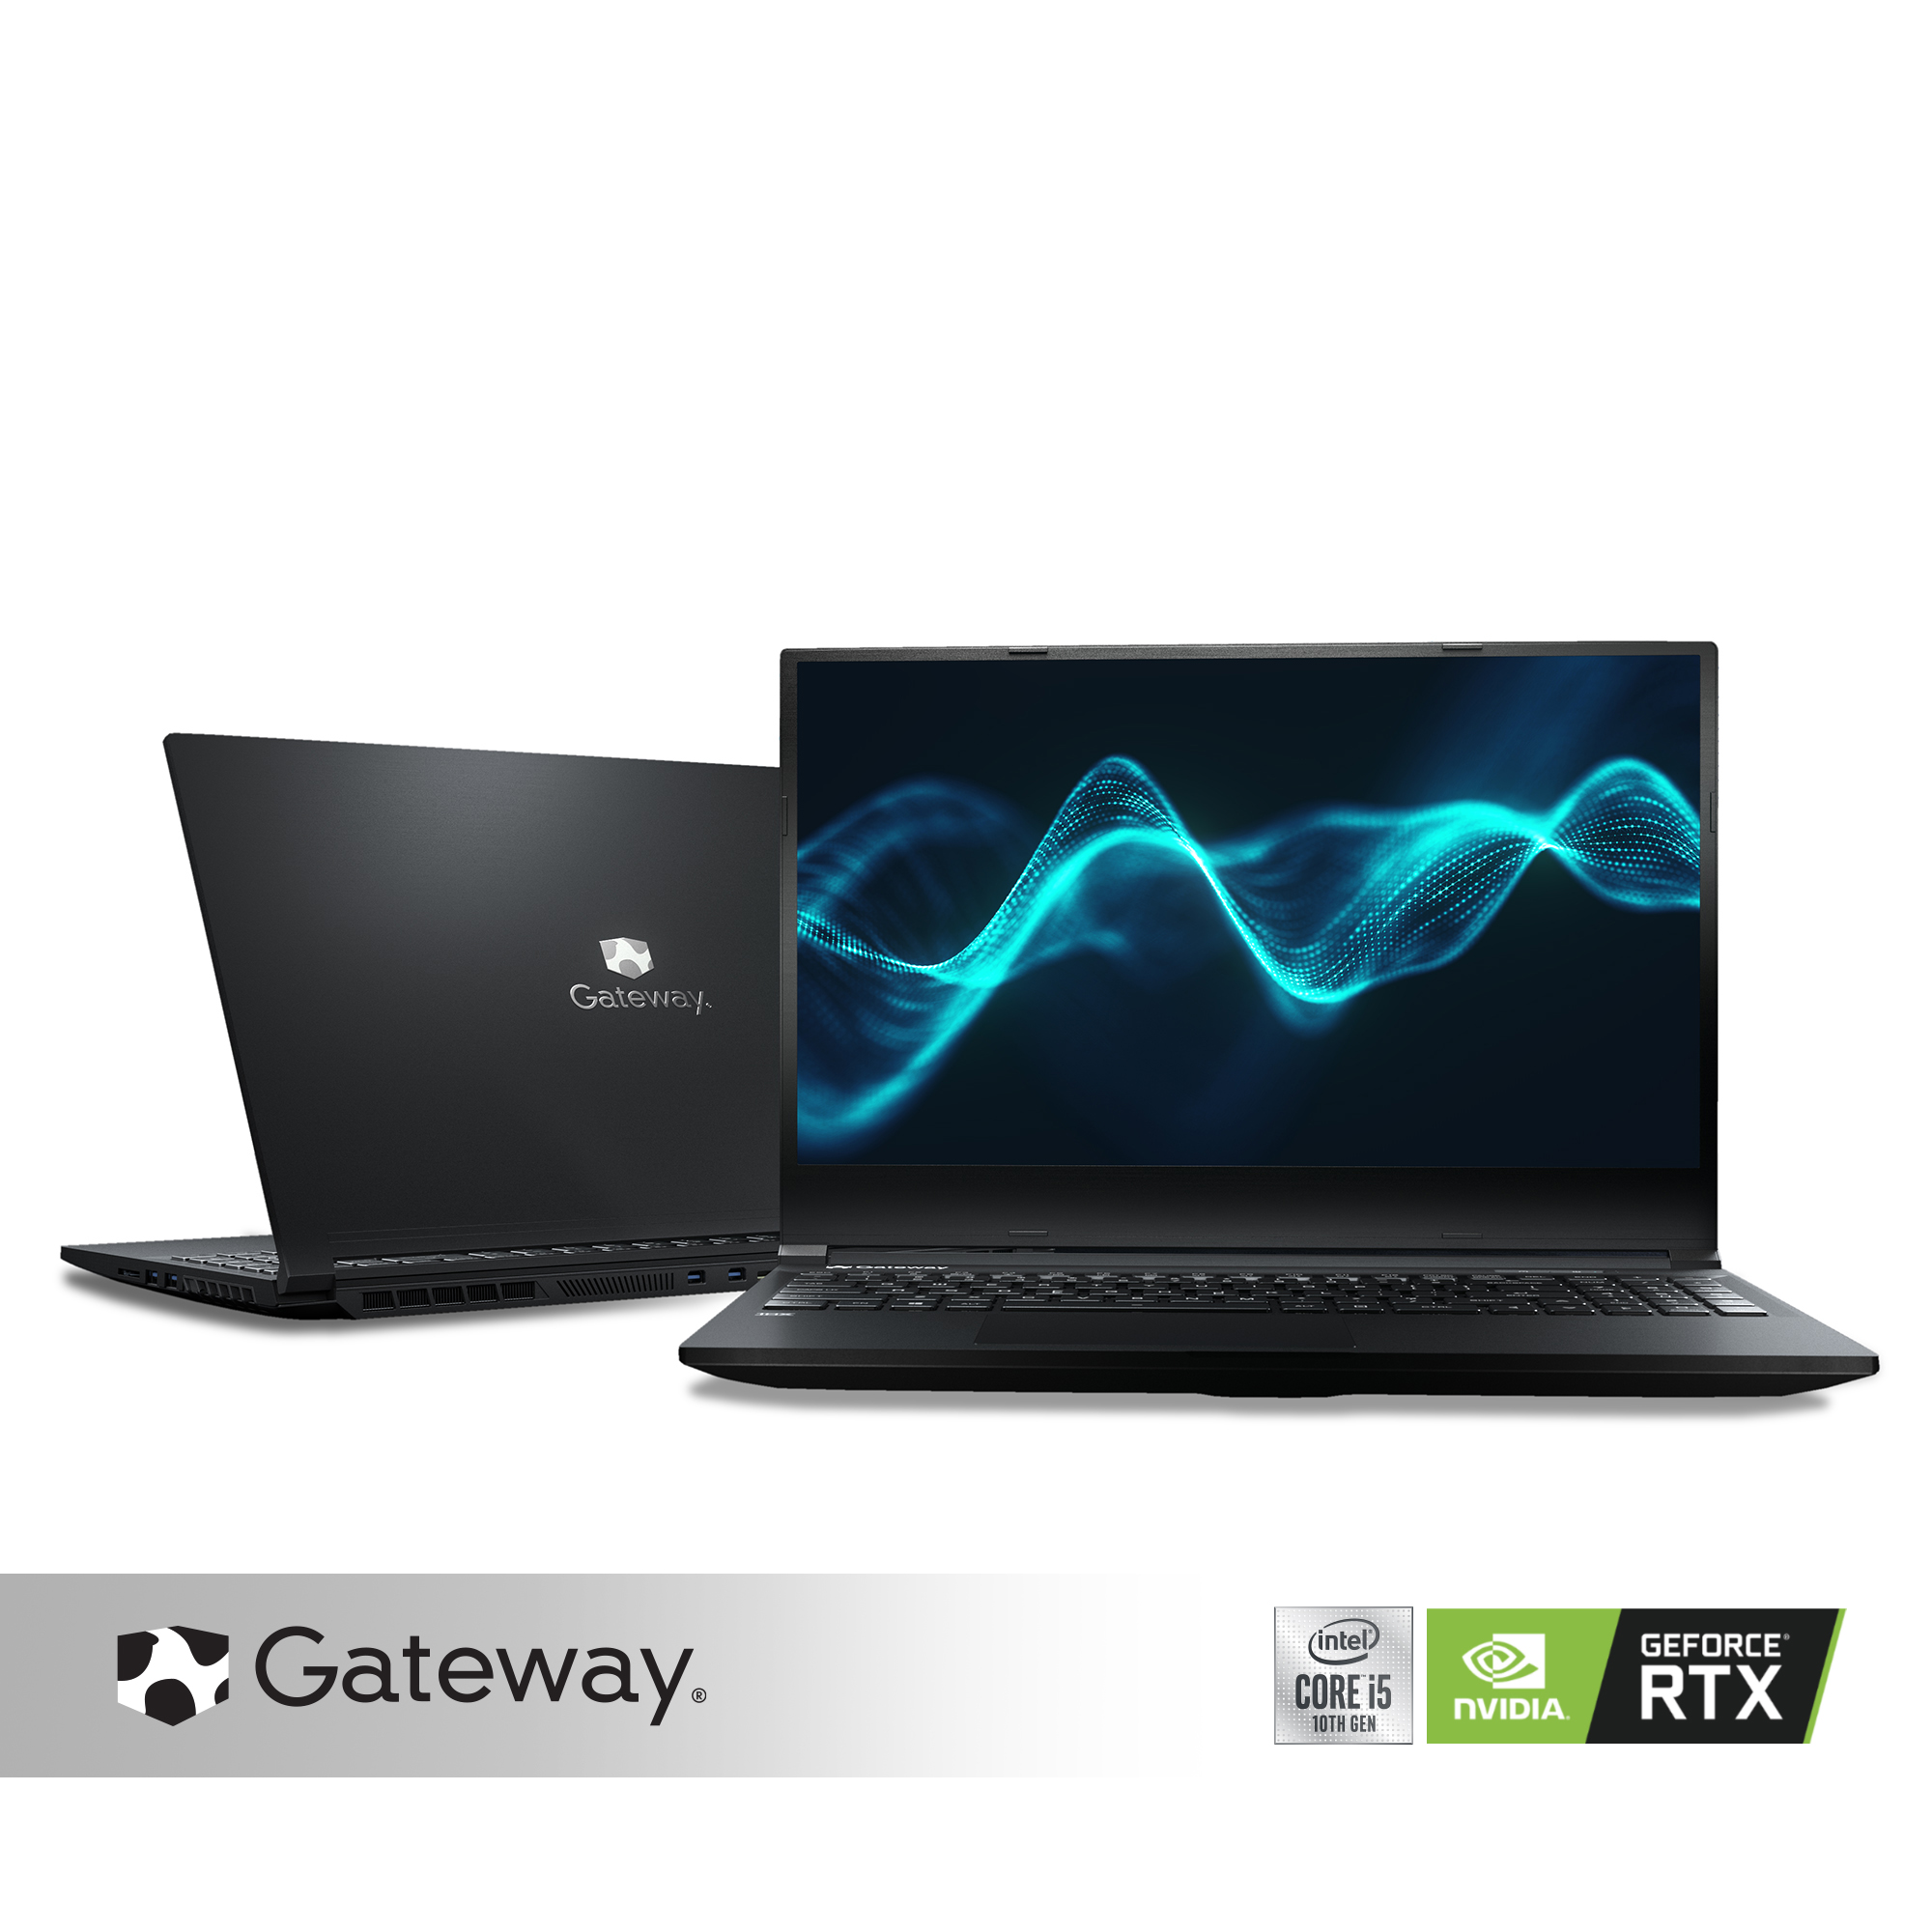 Gateway Creator Series 15.6" FHD Performance Notebook, Intel i5-10300H, NVIDIA 2060 RTX, 8GB RAM, 256GB SSD, Xbox Game Pass for PC, HD Webcam, Cortana, Windows 10 Home - image 1 of 13